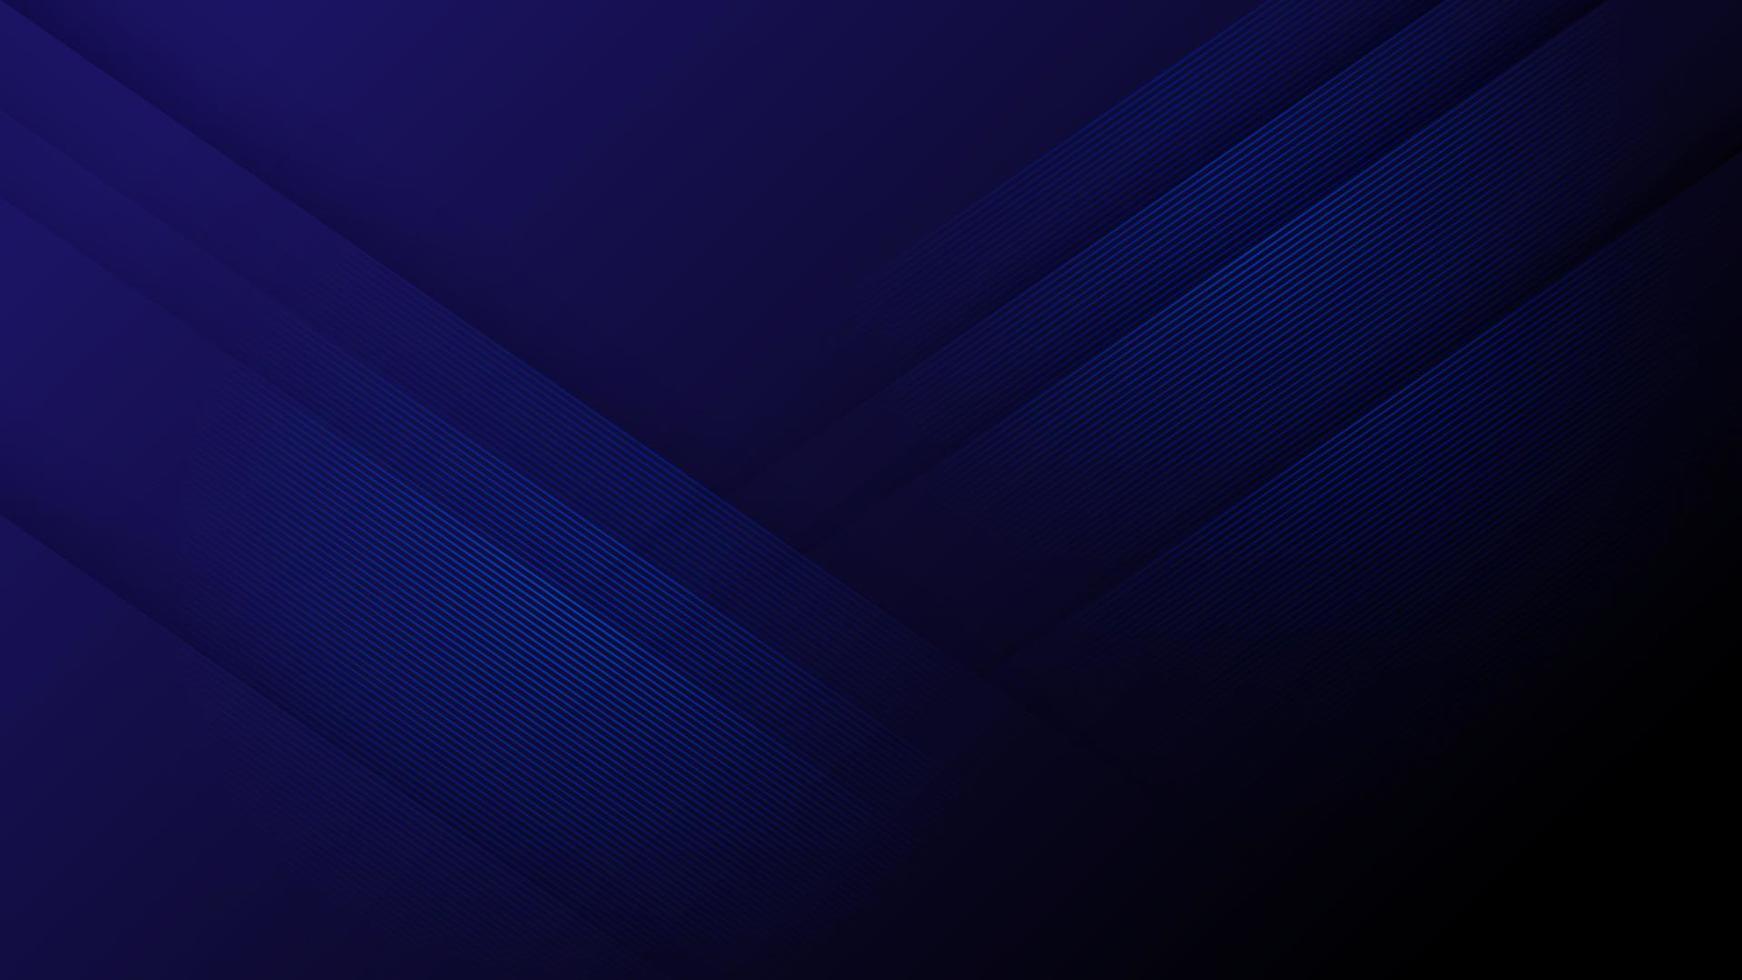 Abstract blue oblique line design with light on dark blue background. Vector illustration